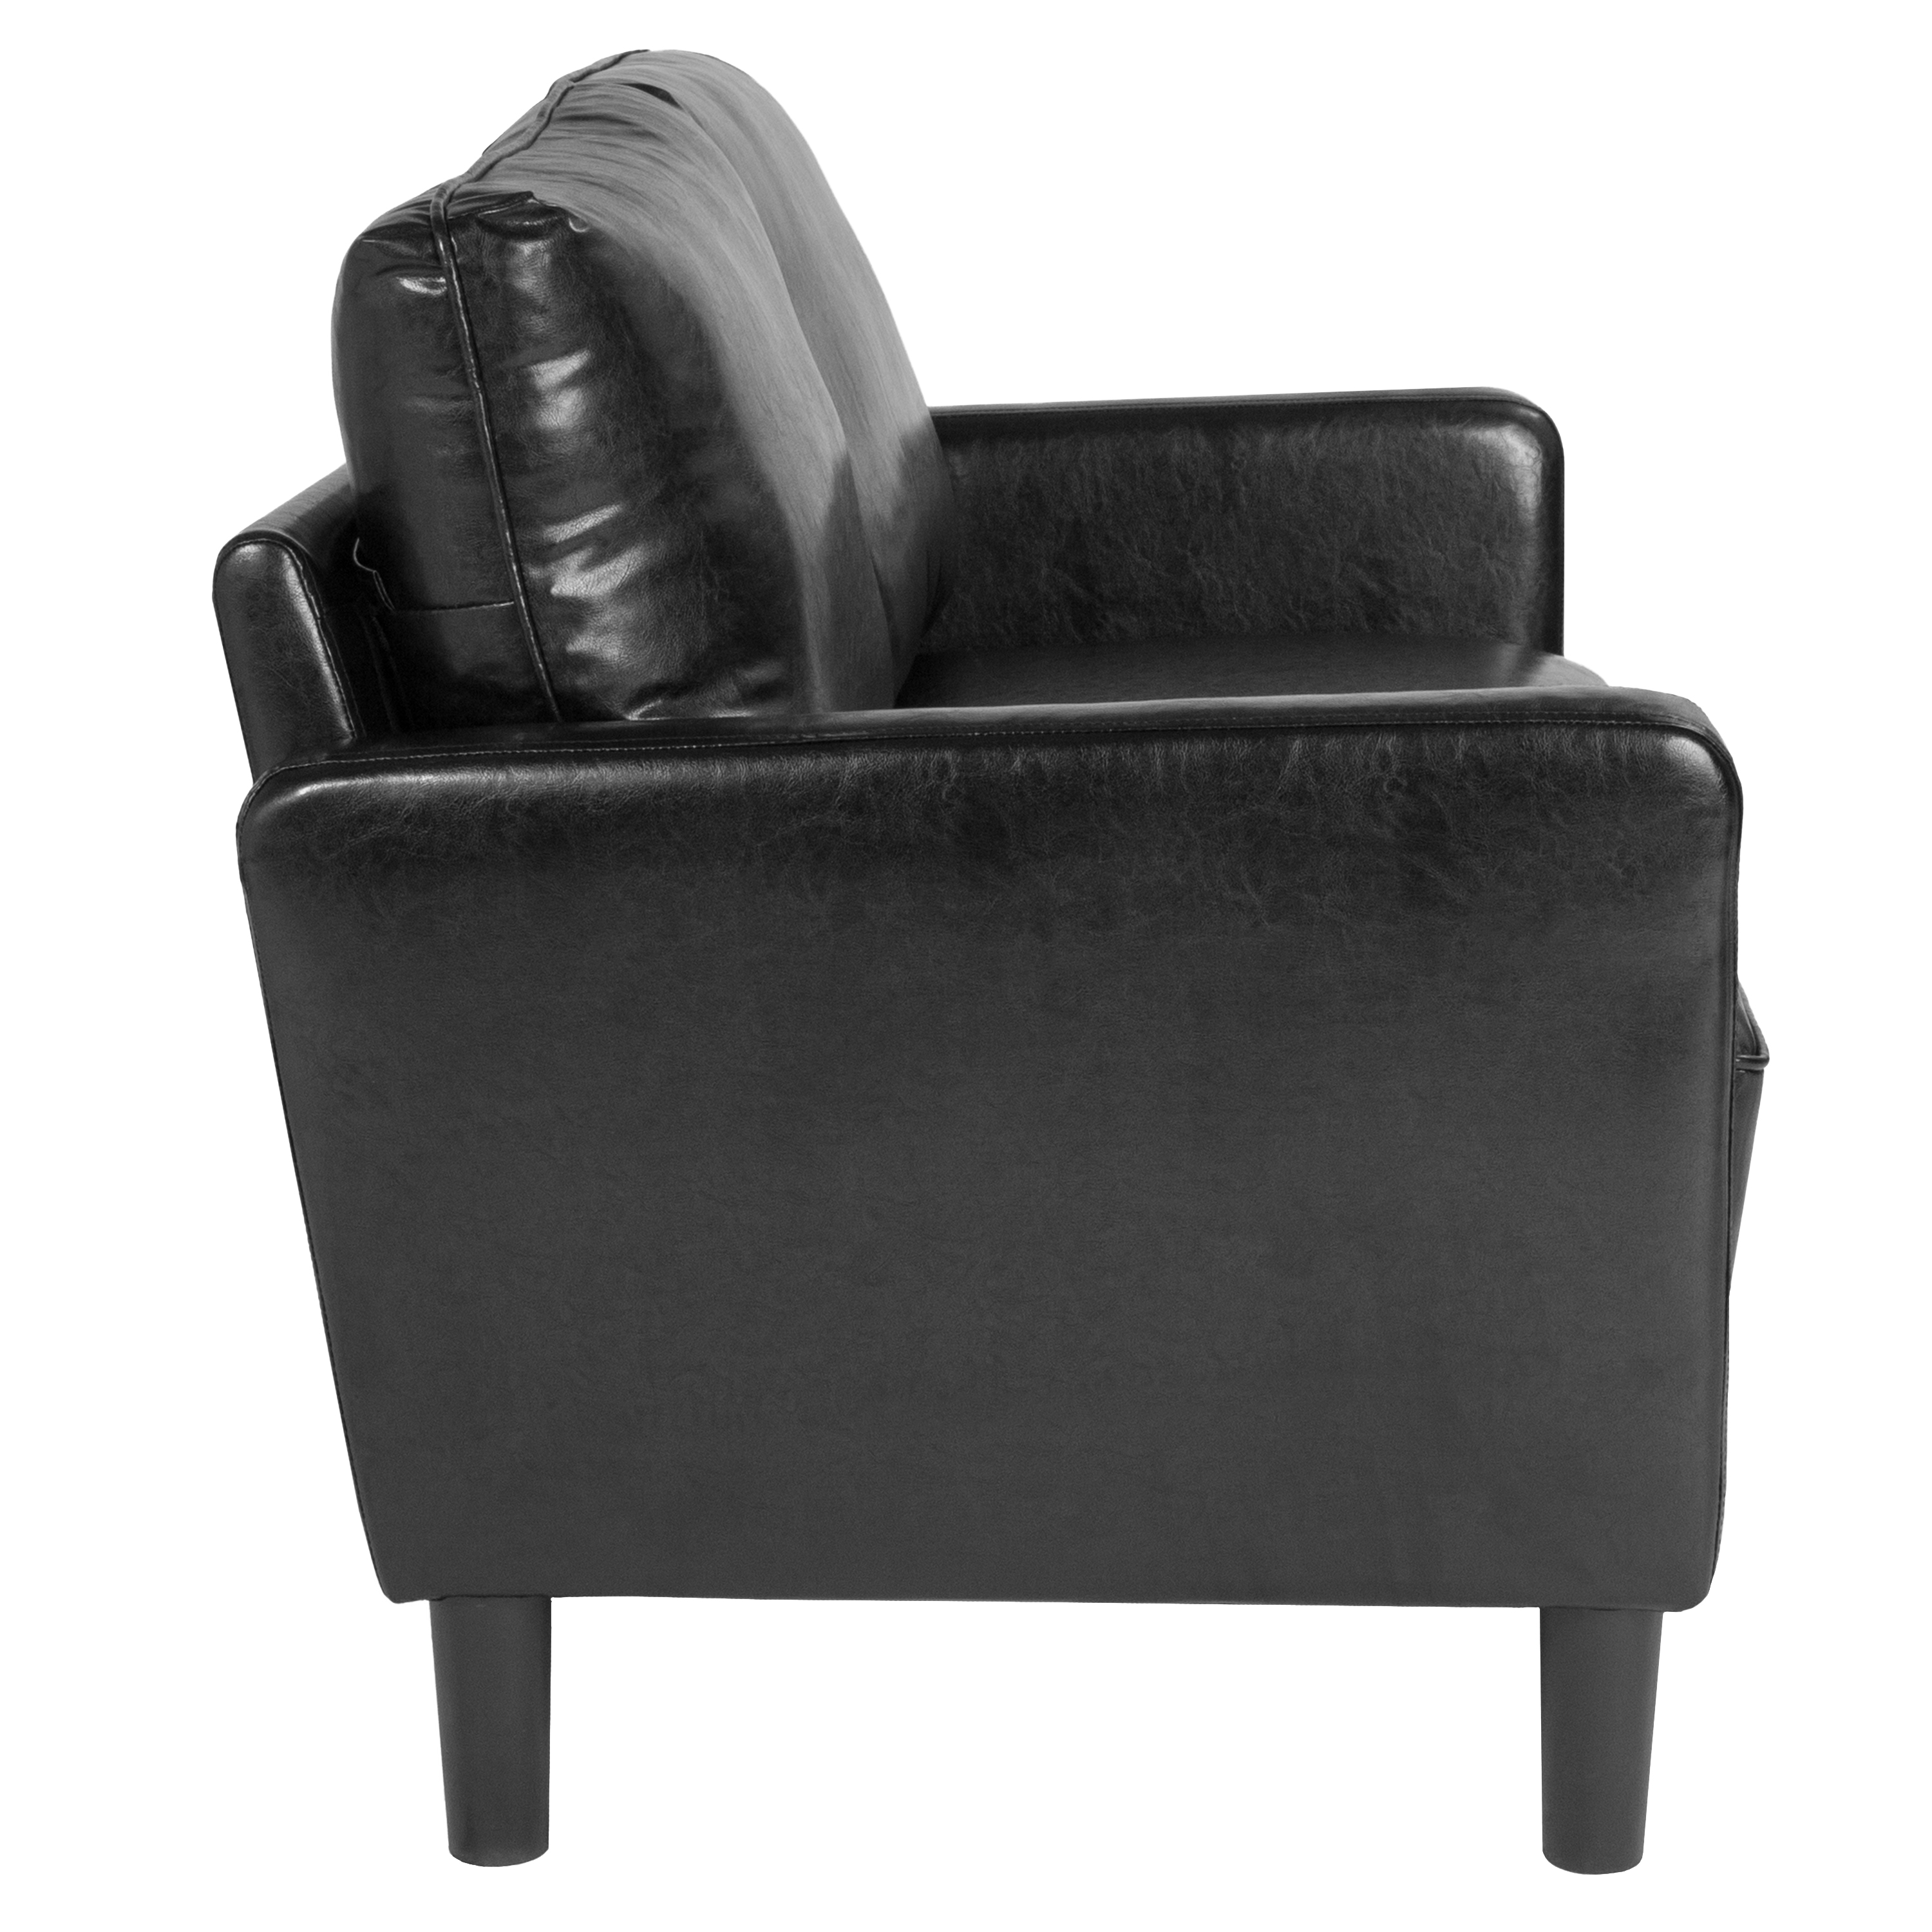 Flash Furniture Washington Park Upholstered Loveseat in Black LeatherSoft - image 4 of 5